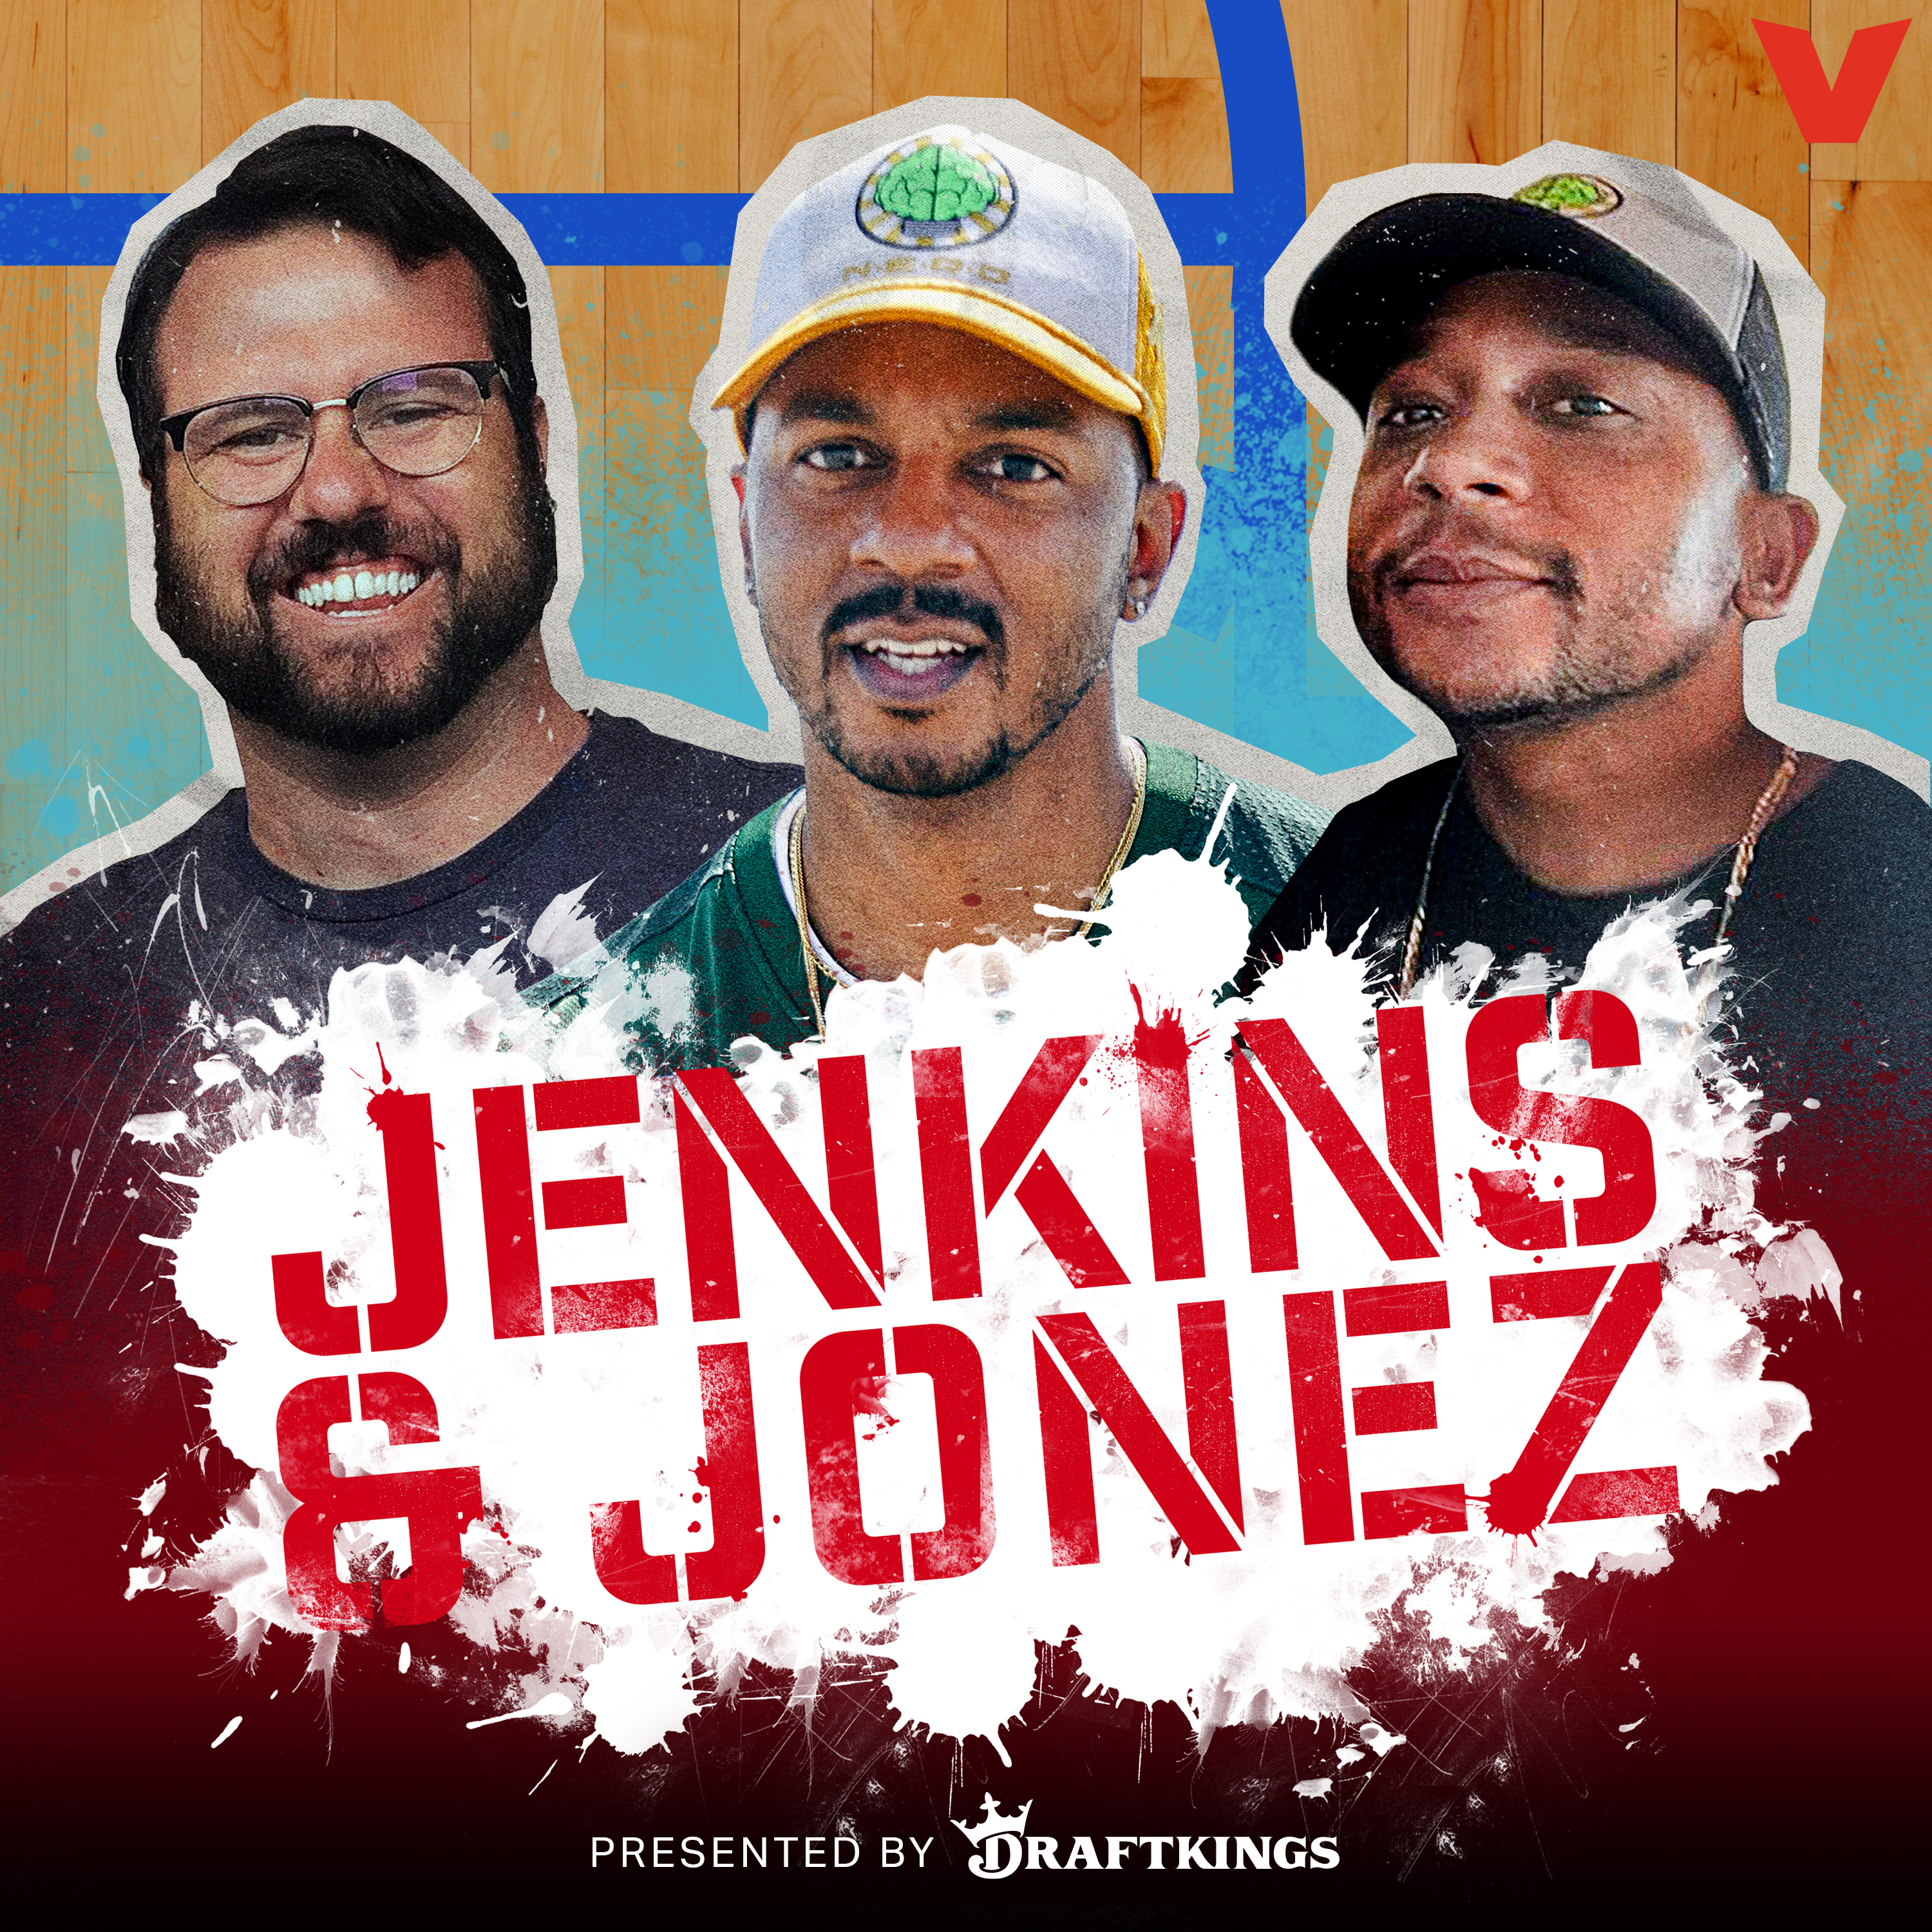 Jenkins and Jonez - Is It Finally the Celtics Year?